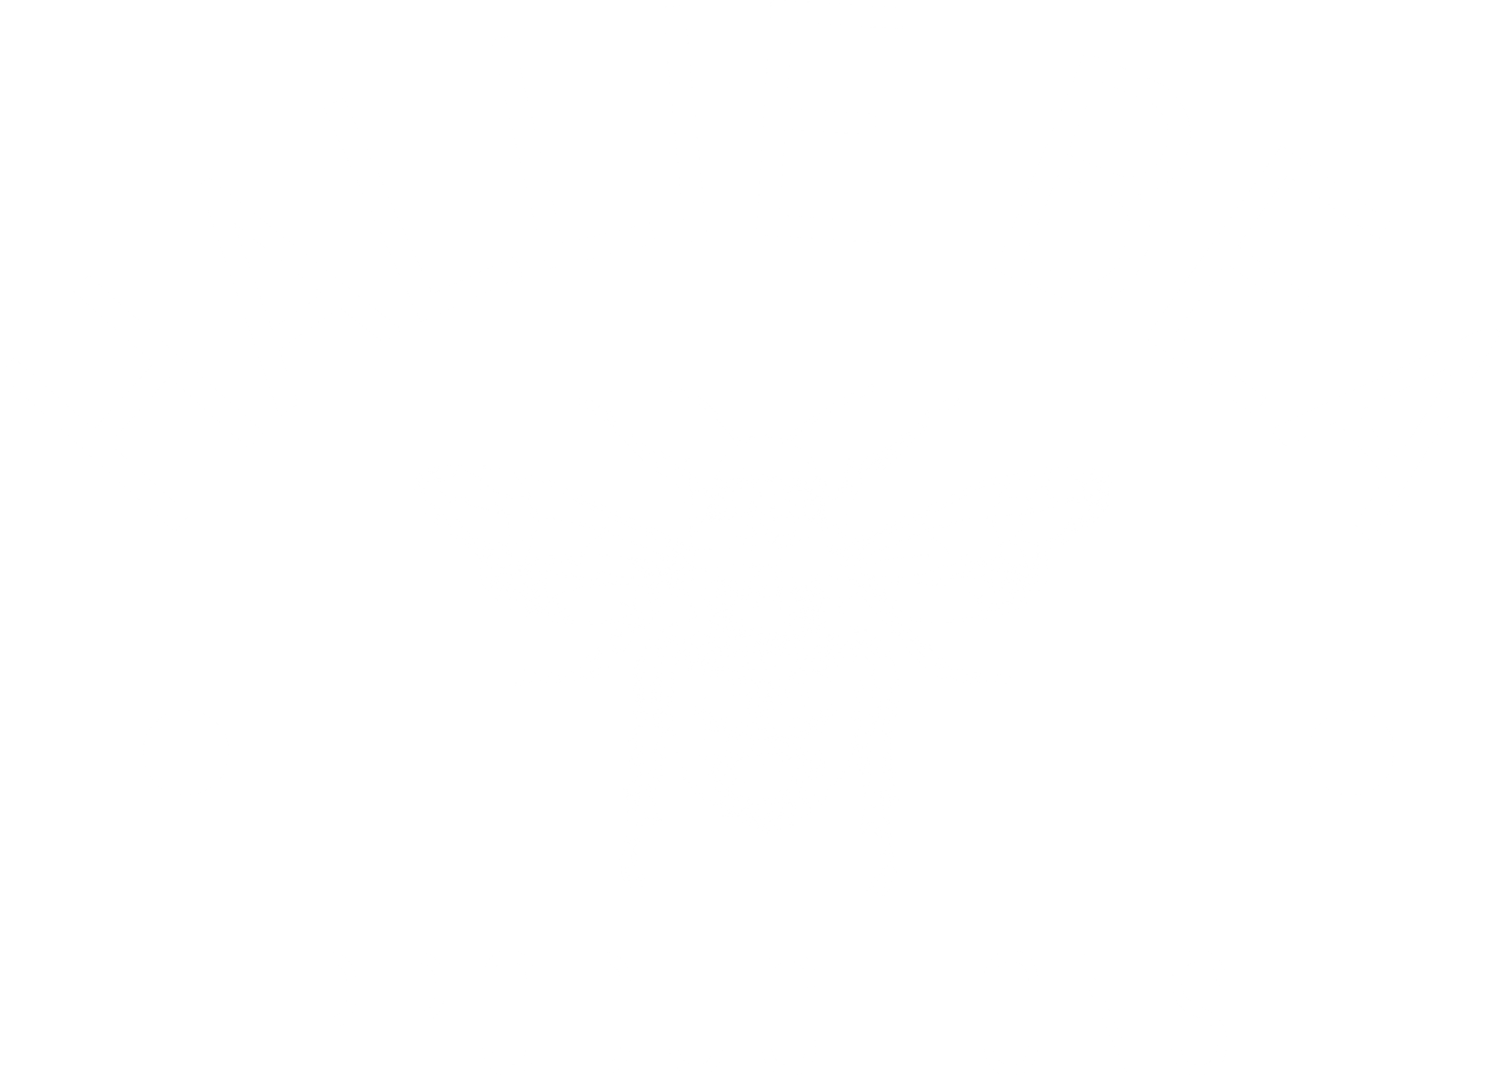 Hallie Bea Productions